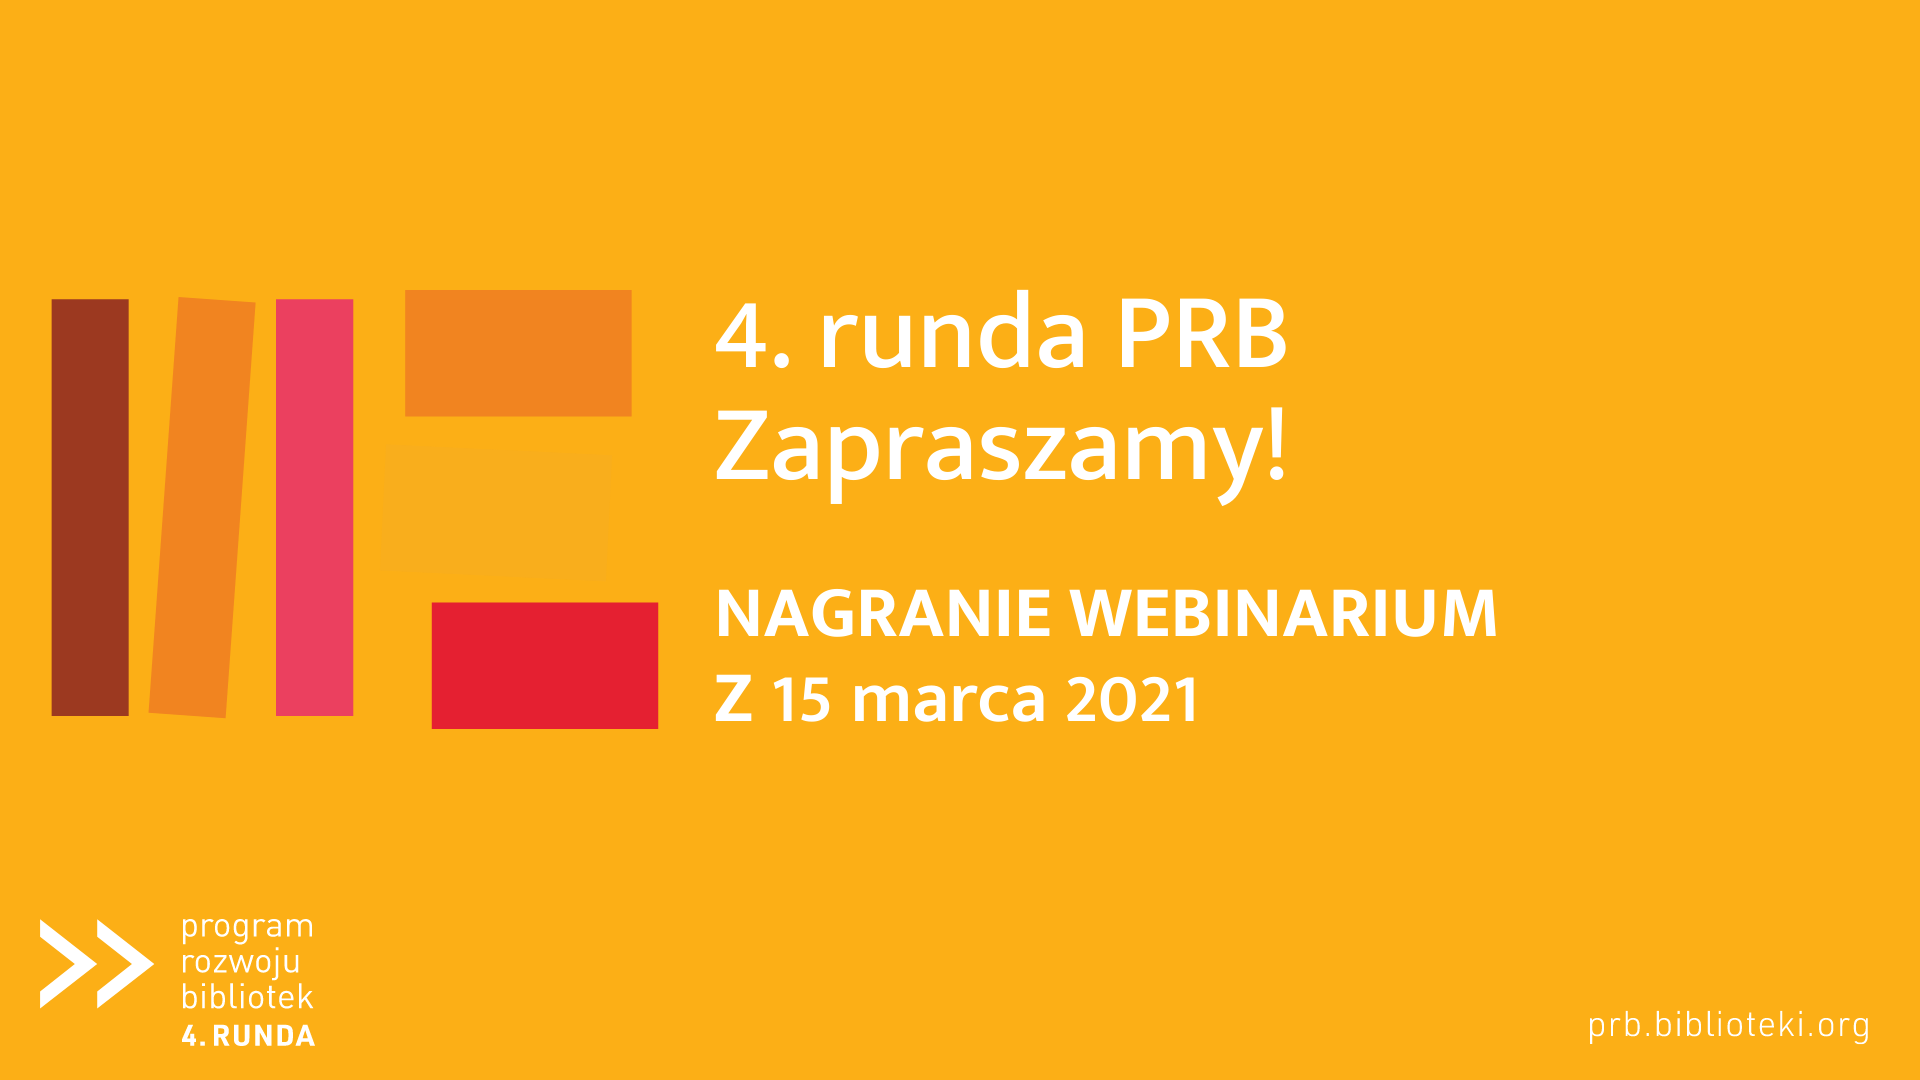 Nagranie webinarium rekrutacyjnego 4. rundy PRB z dn. 15 marca 2021 r.